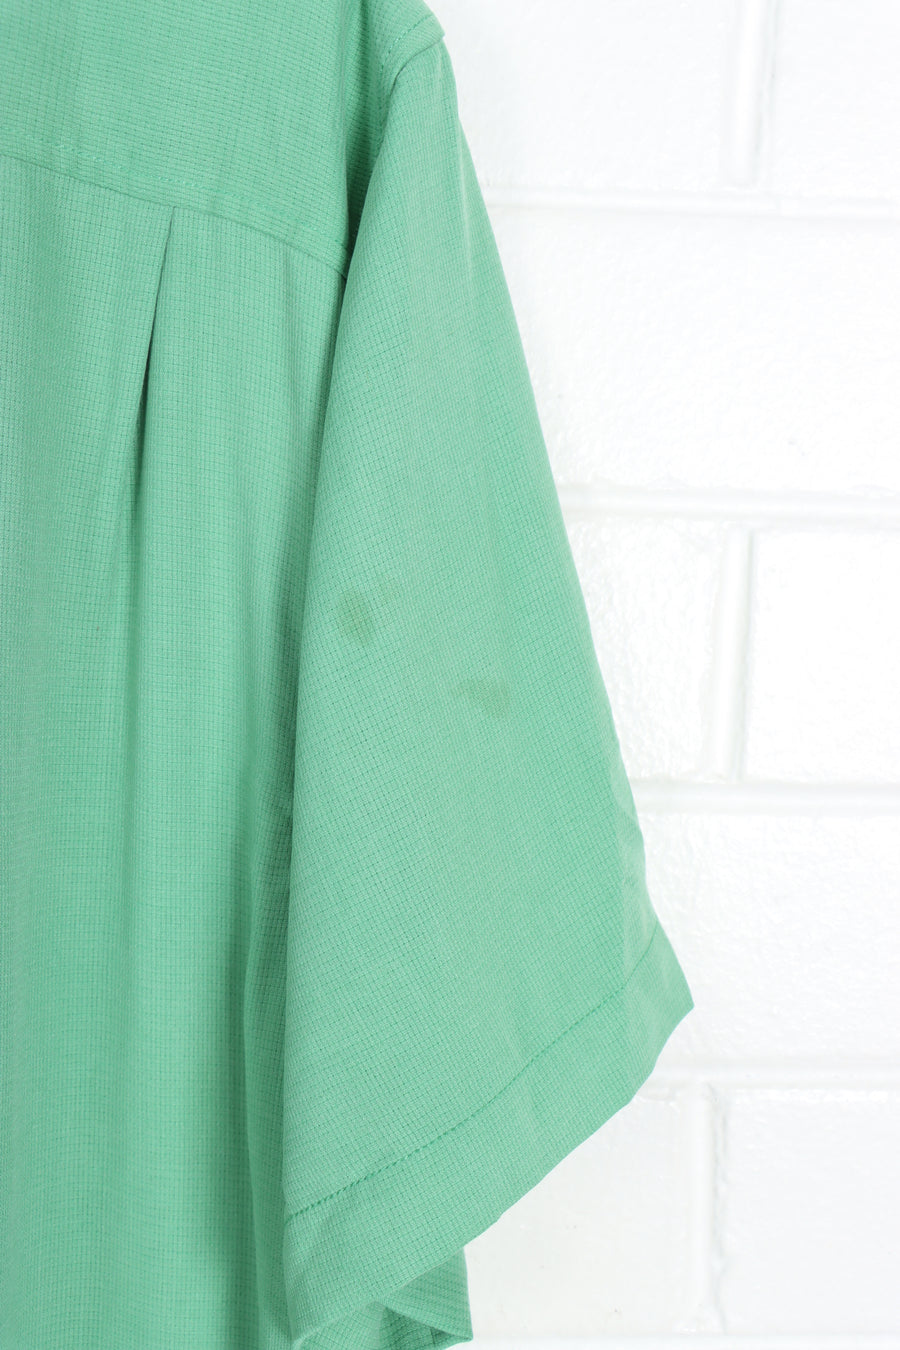 TOMMY BAHAMA Green Silk Short Sleeve Shirt (XL) - Vintage Sole Melbourne